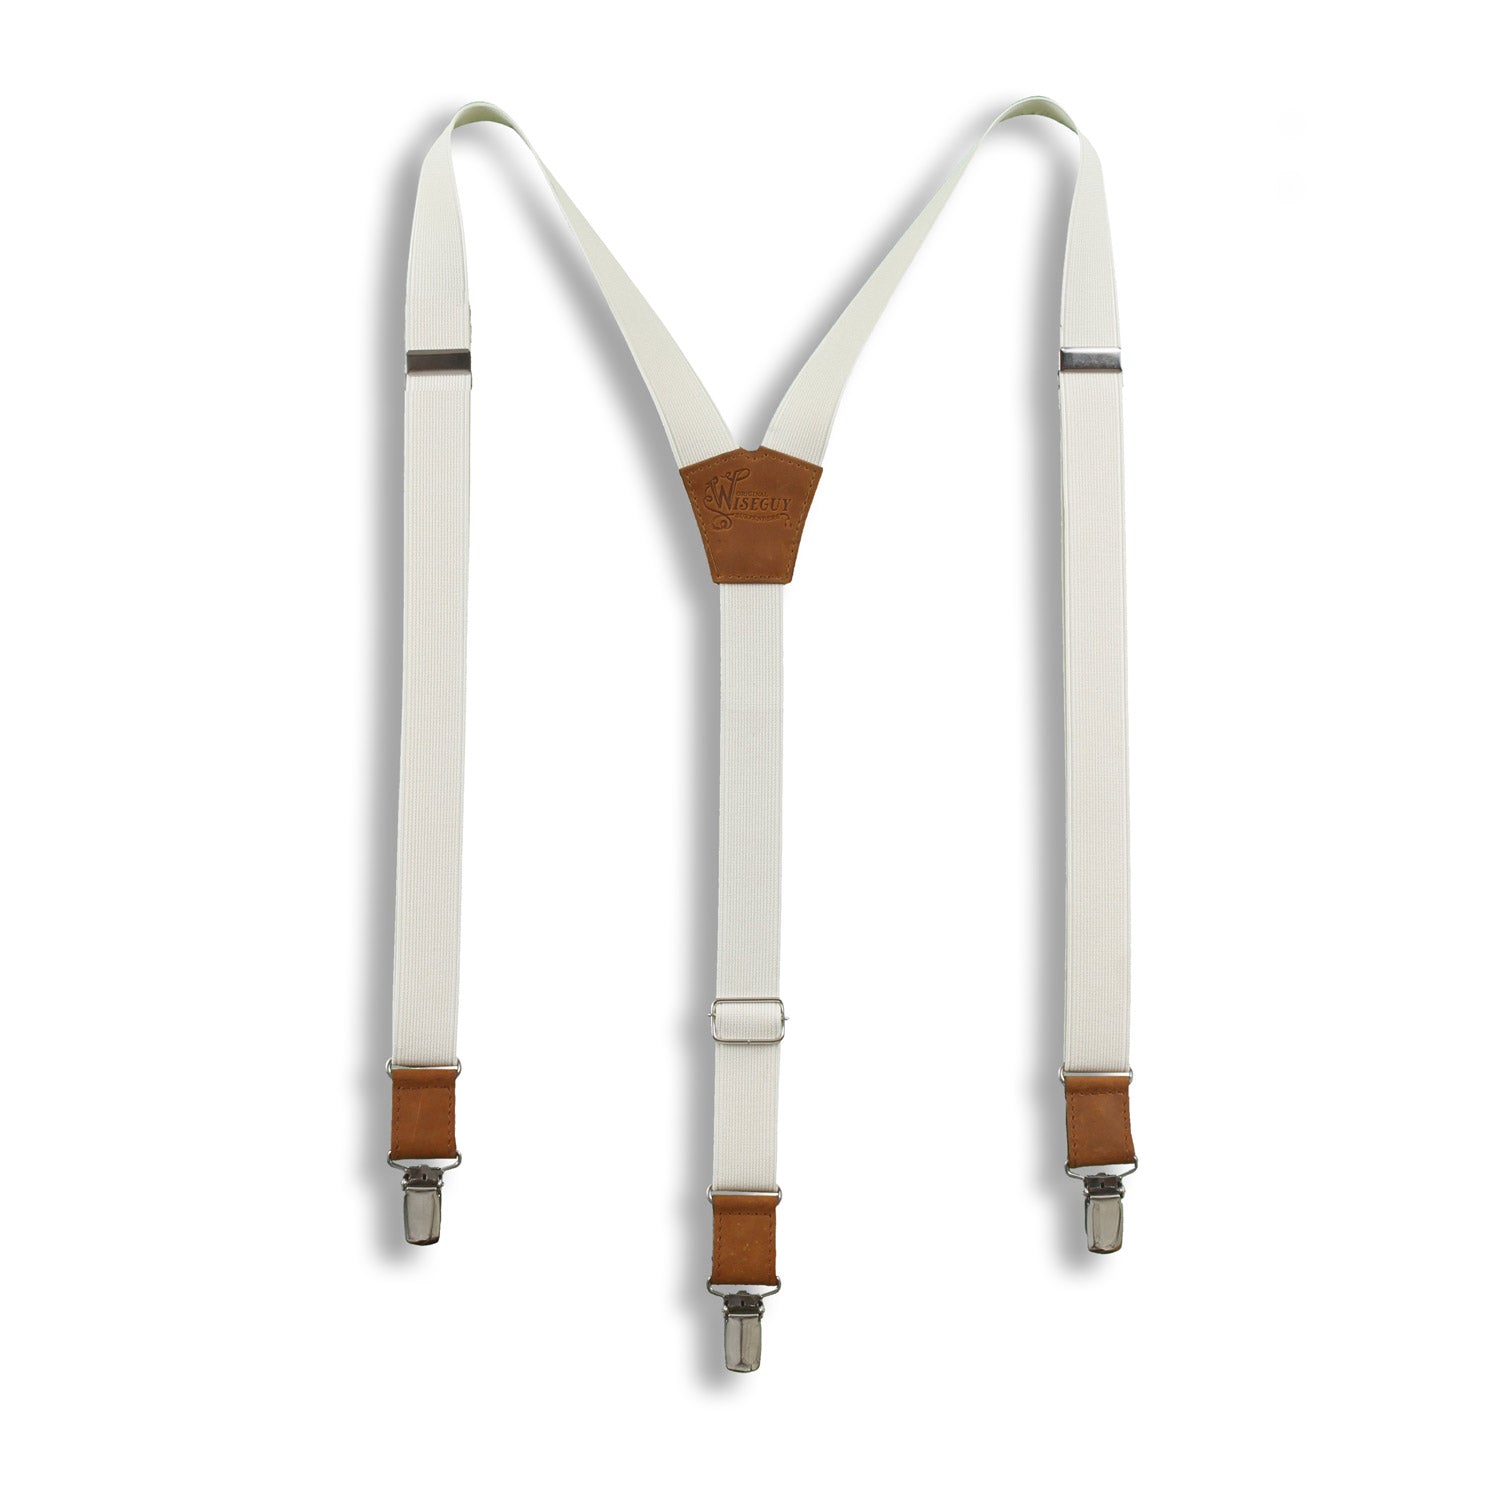 Vintage White on Camel Brown Suspenders slim straps (1 inch/2.54 cm) - Wiseguy Suspenders